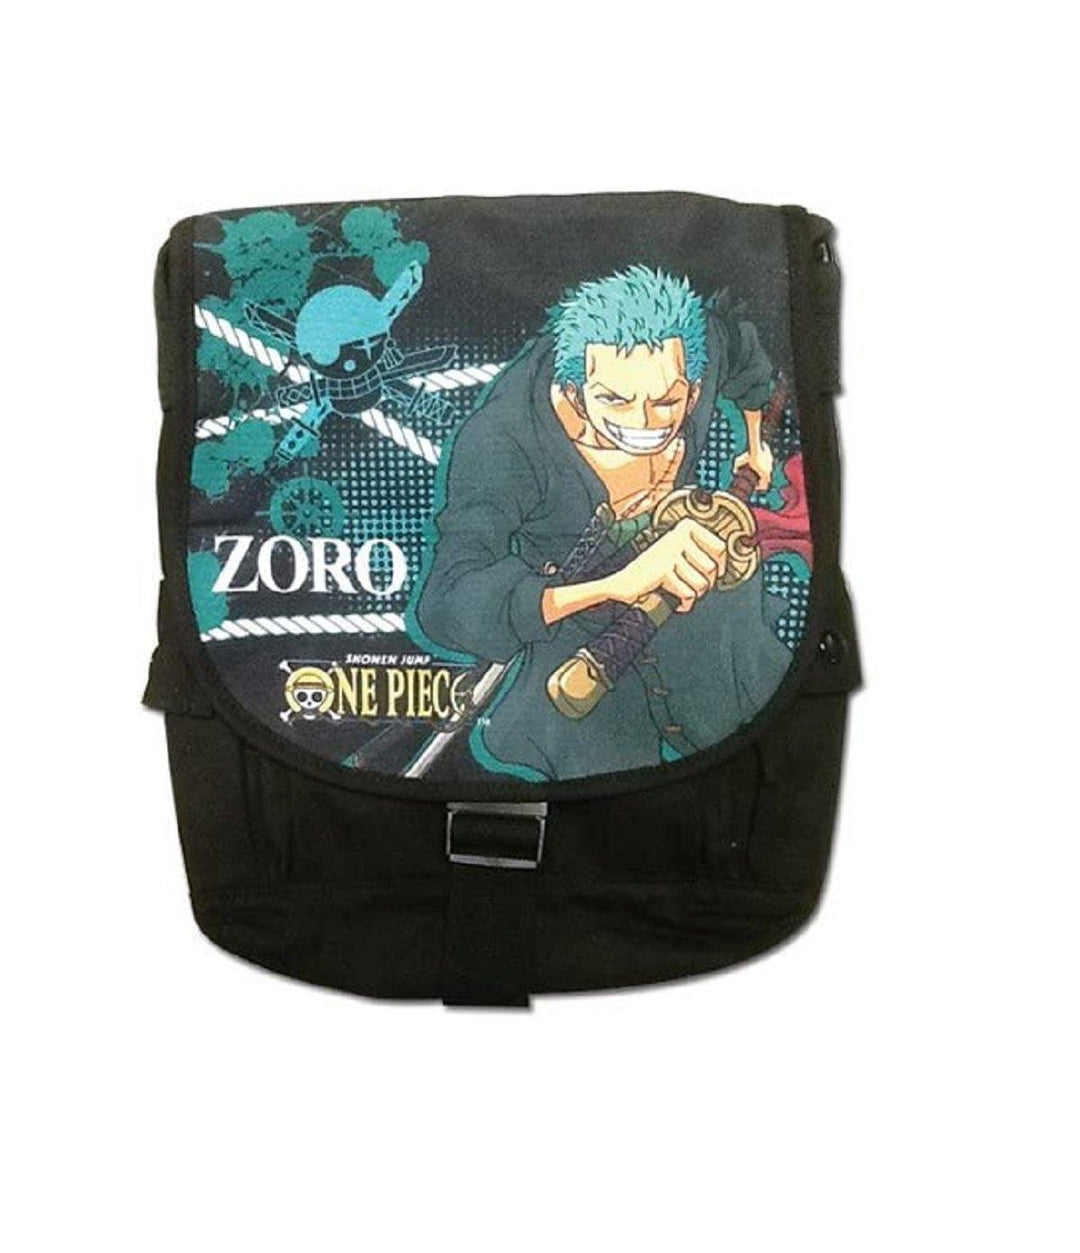 One Piece Anime Zoro Messenger Bag